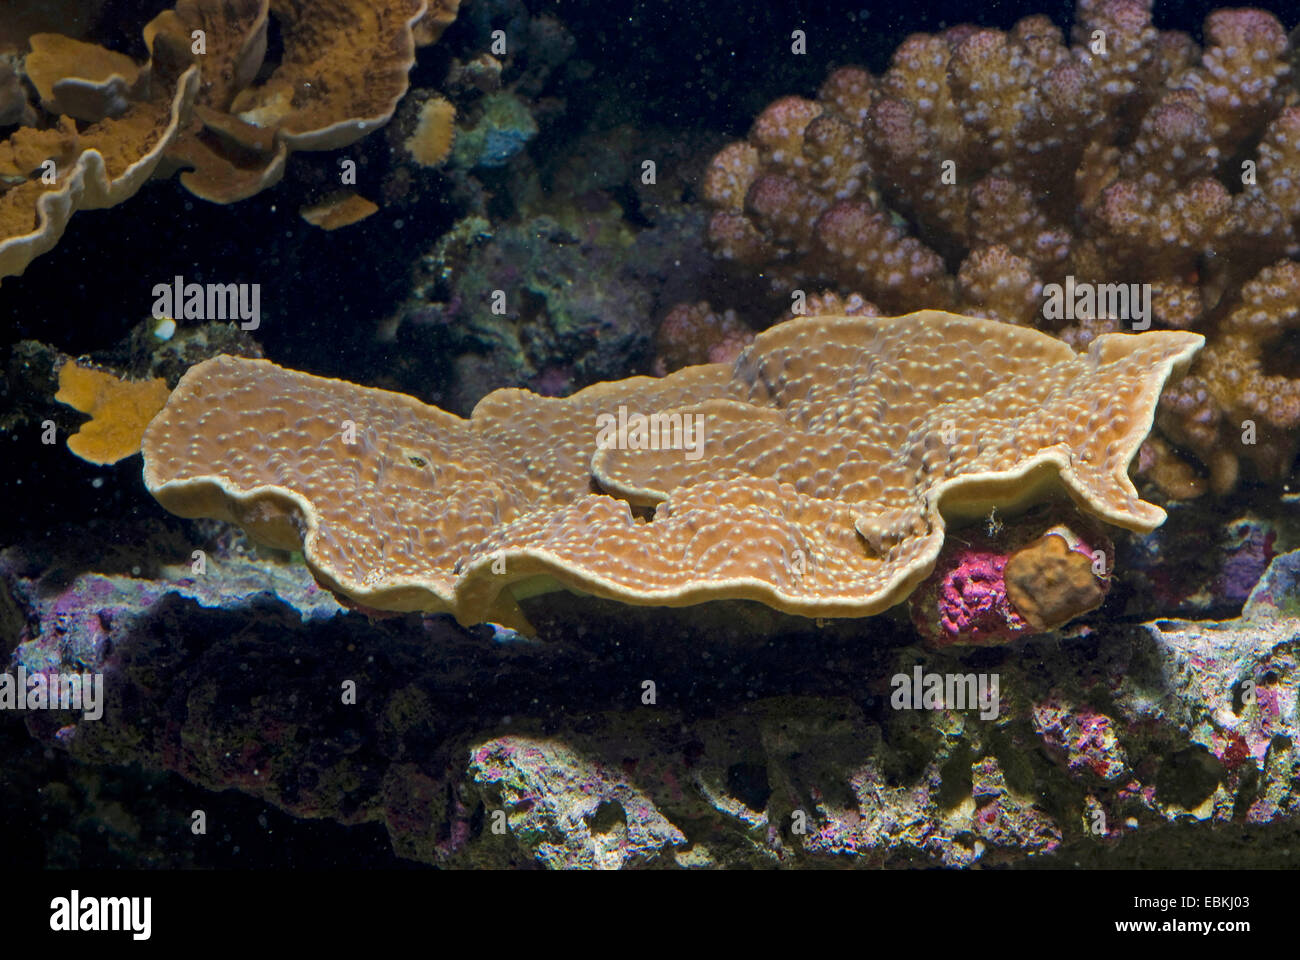 Coral lechuga plegada, desplazamiento, coral coral lechuga trenzado (Turbinaria mesenterina), vista lateral Foto de stock